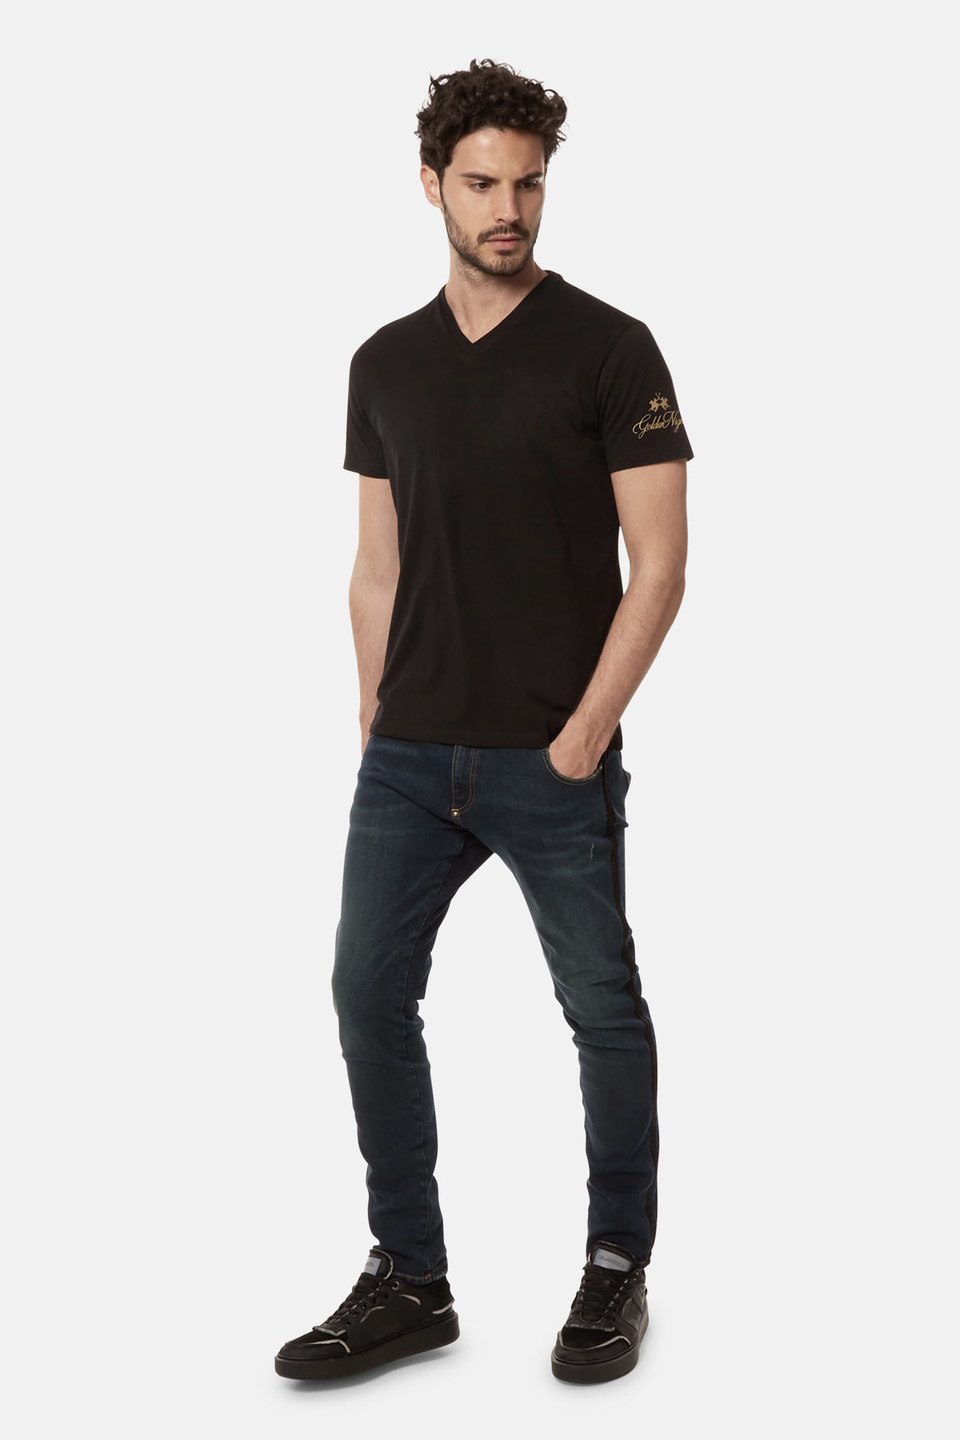 Men's regular-fit cotton t-shirt - La Martina - Official Online Shop